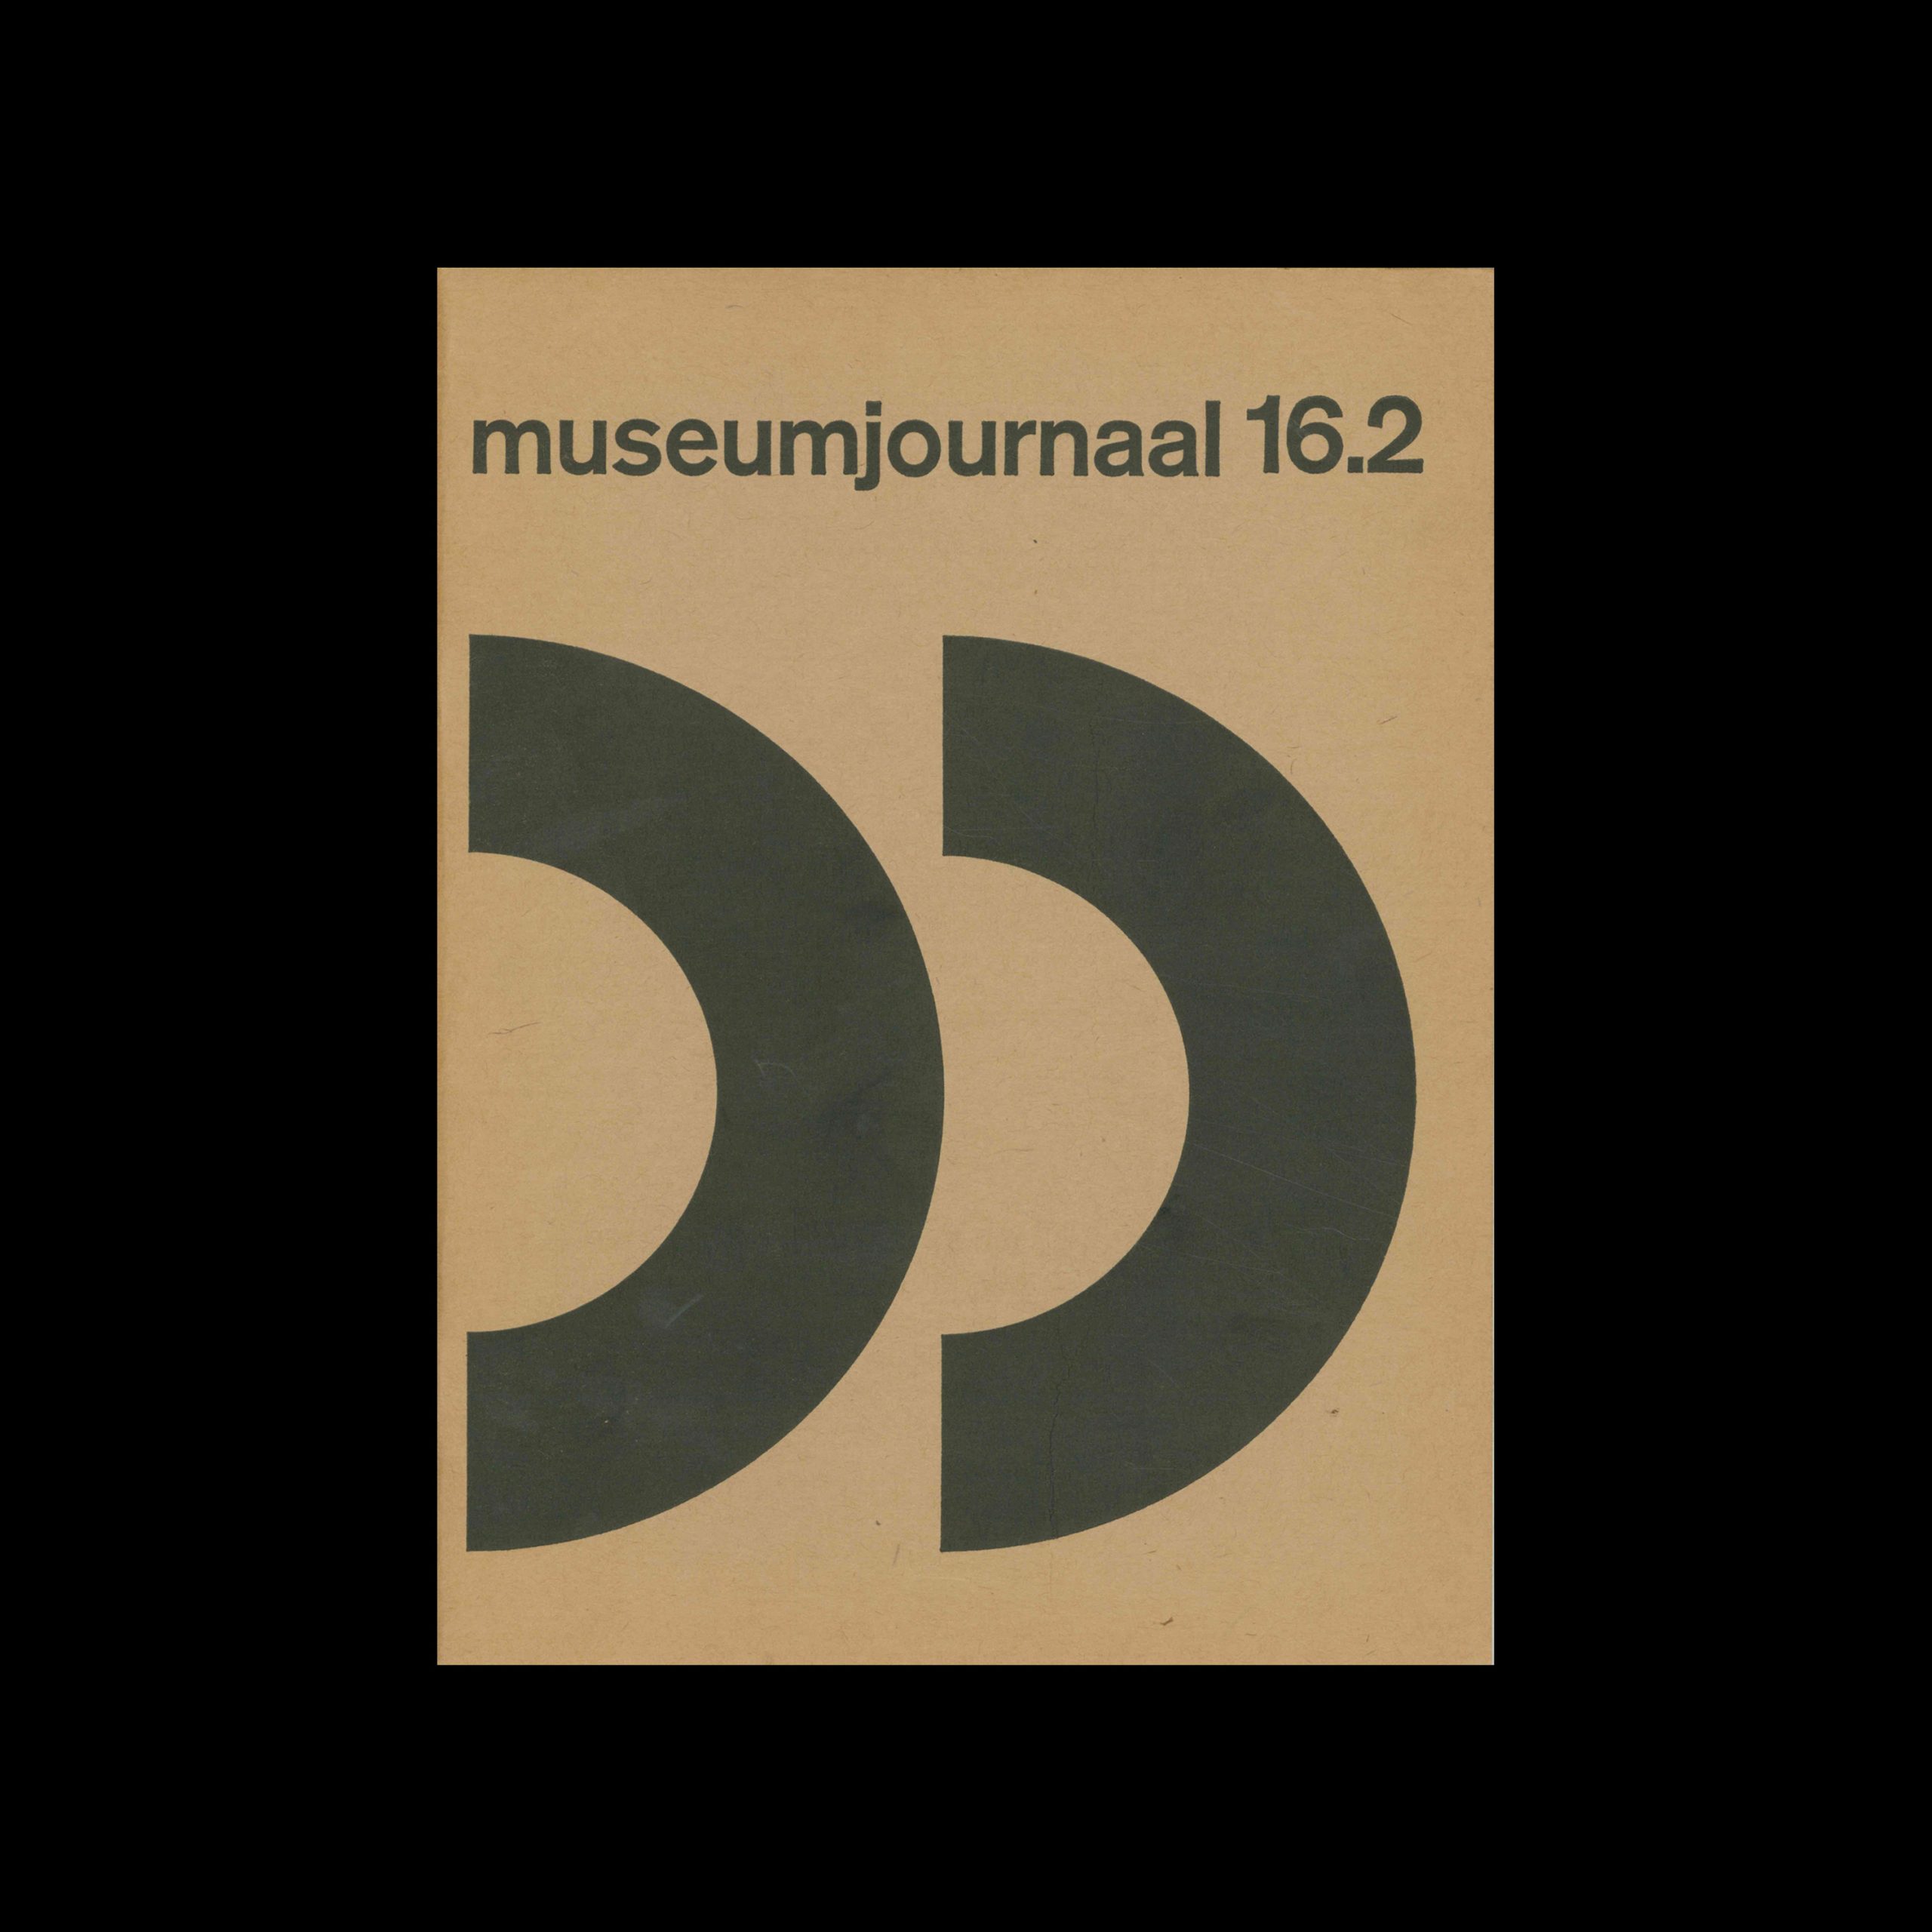 Museumjournaal, Serie 16 no2, 1971. Designed by Jurriaan Schrofer.